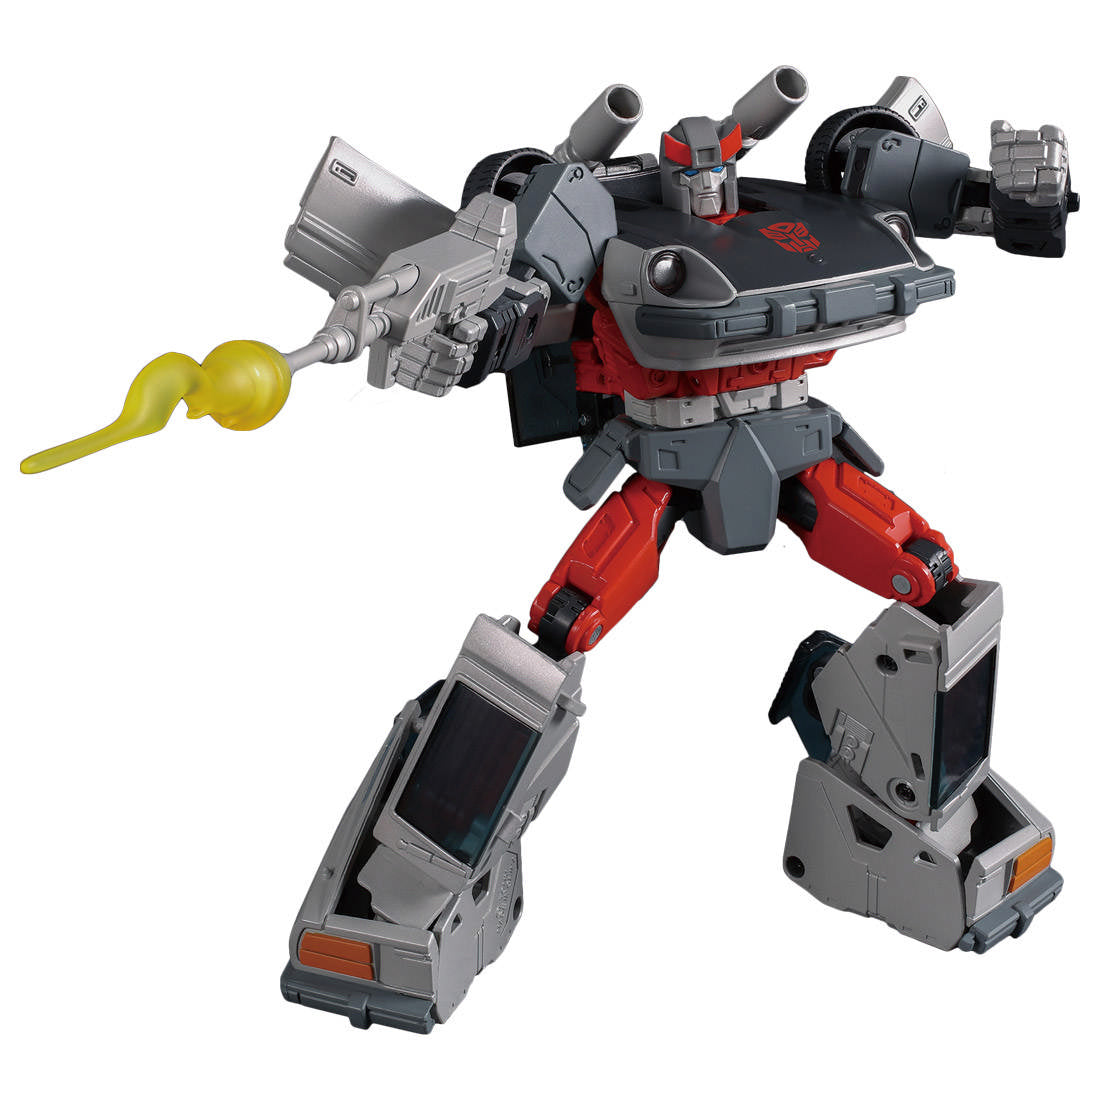 TakaraTomy - Transformers Masterpiece - MP-18+ - Streak (Bluestreak) (TakaraTomy Mall Exclusive) - Marvelous Toys